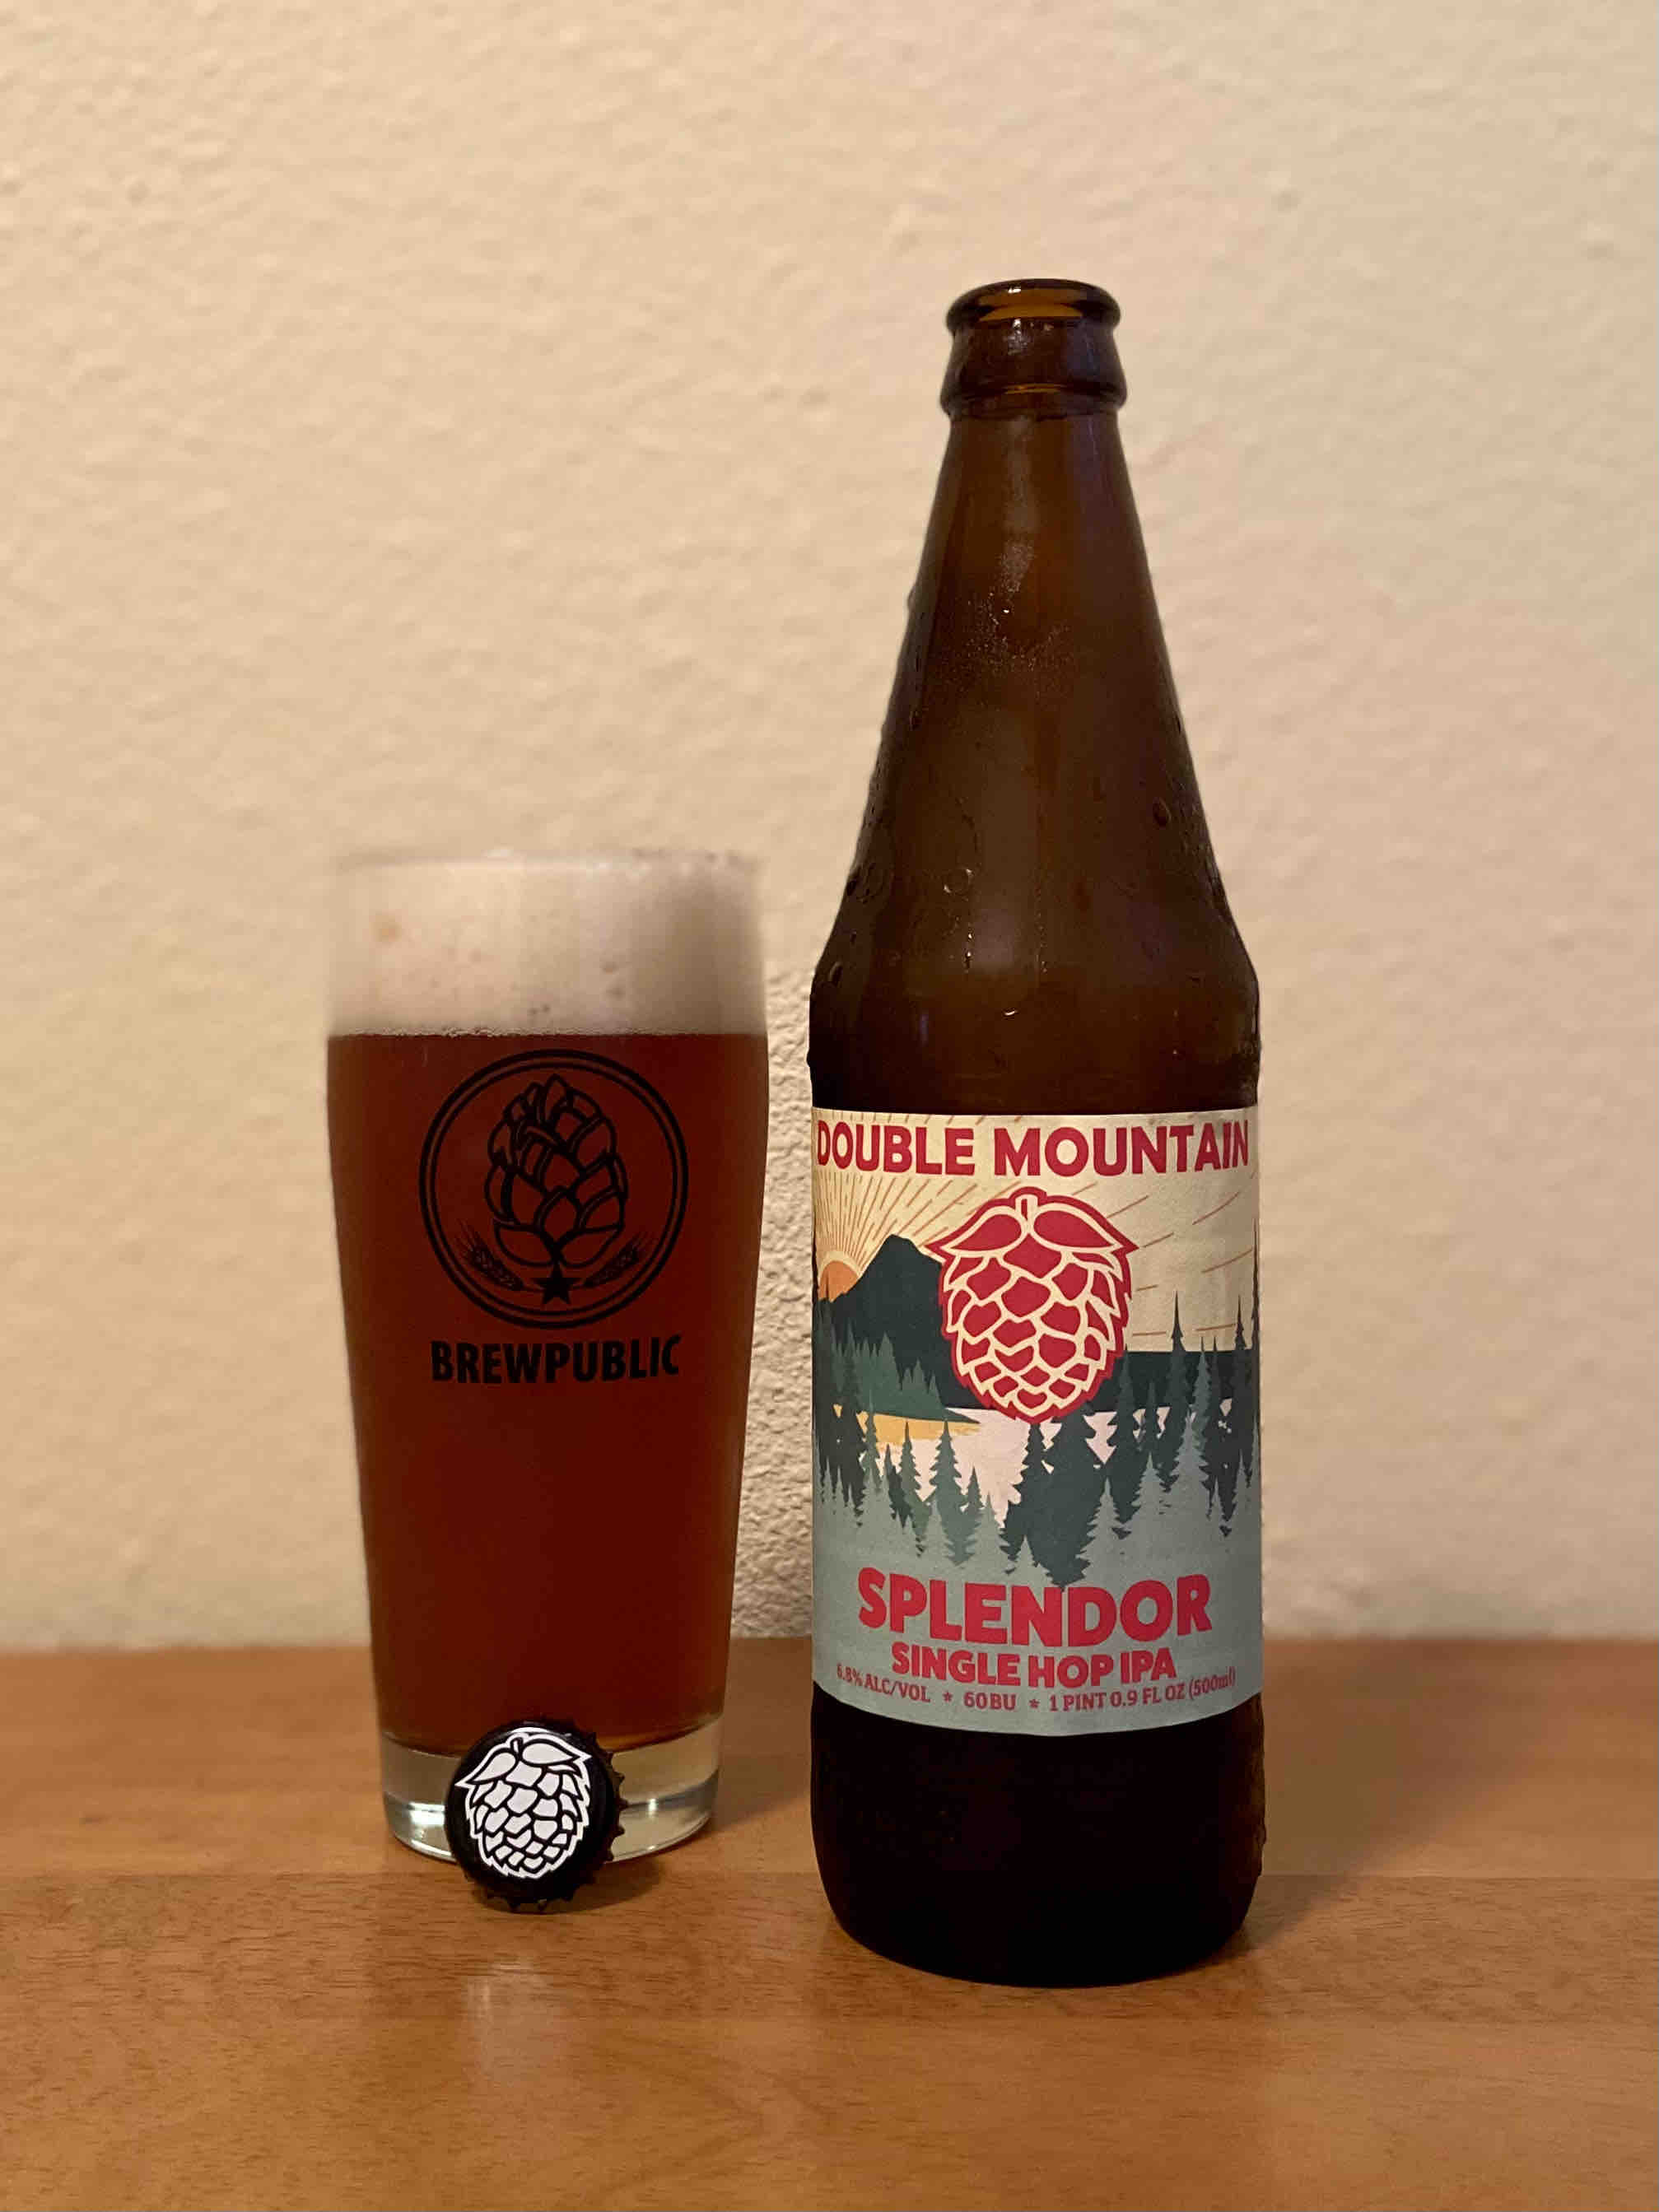 Splender Single Hop IPA from Double Mountain Brewery.